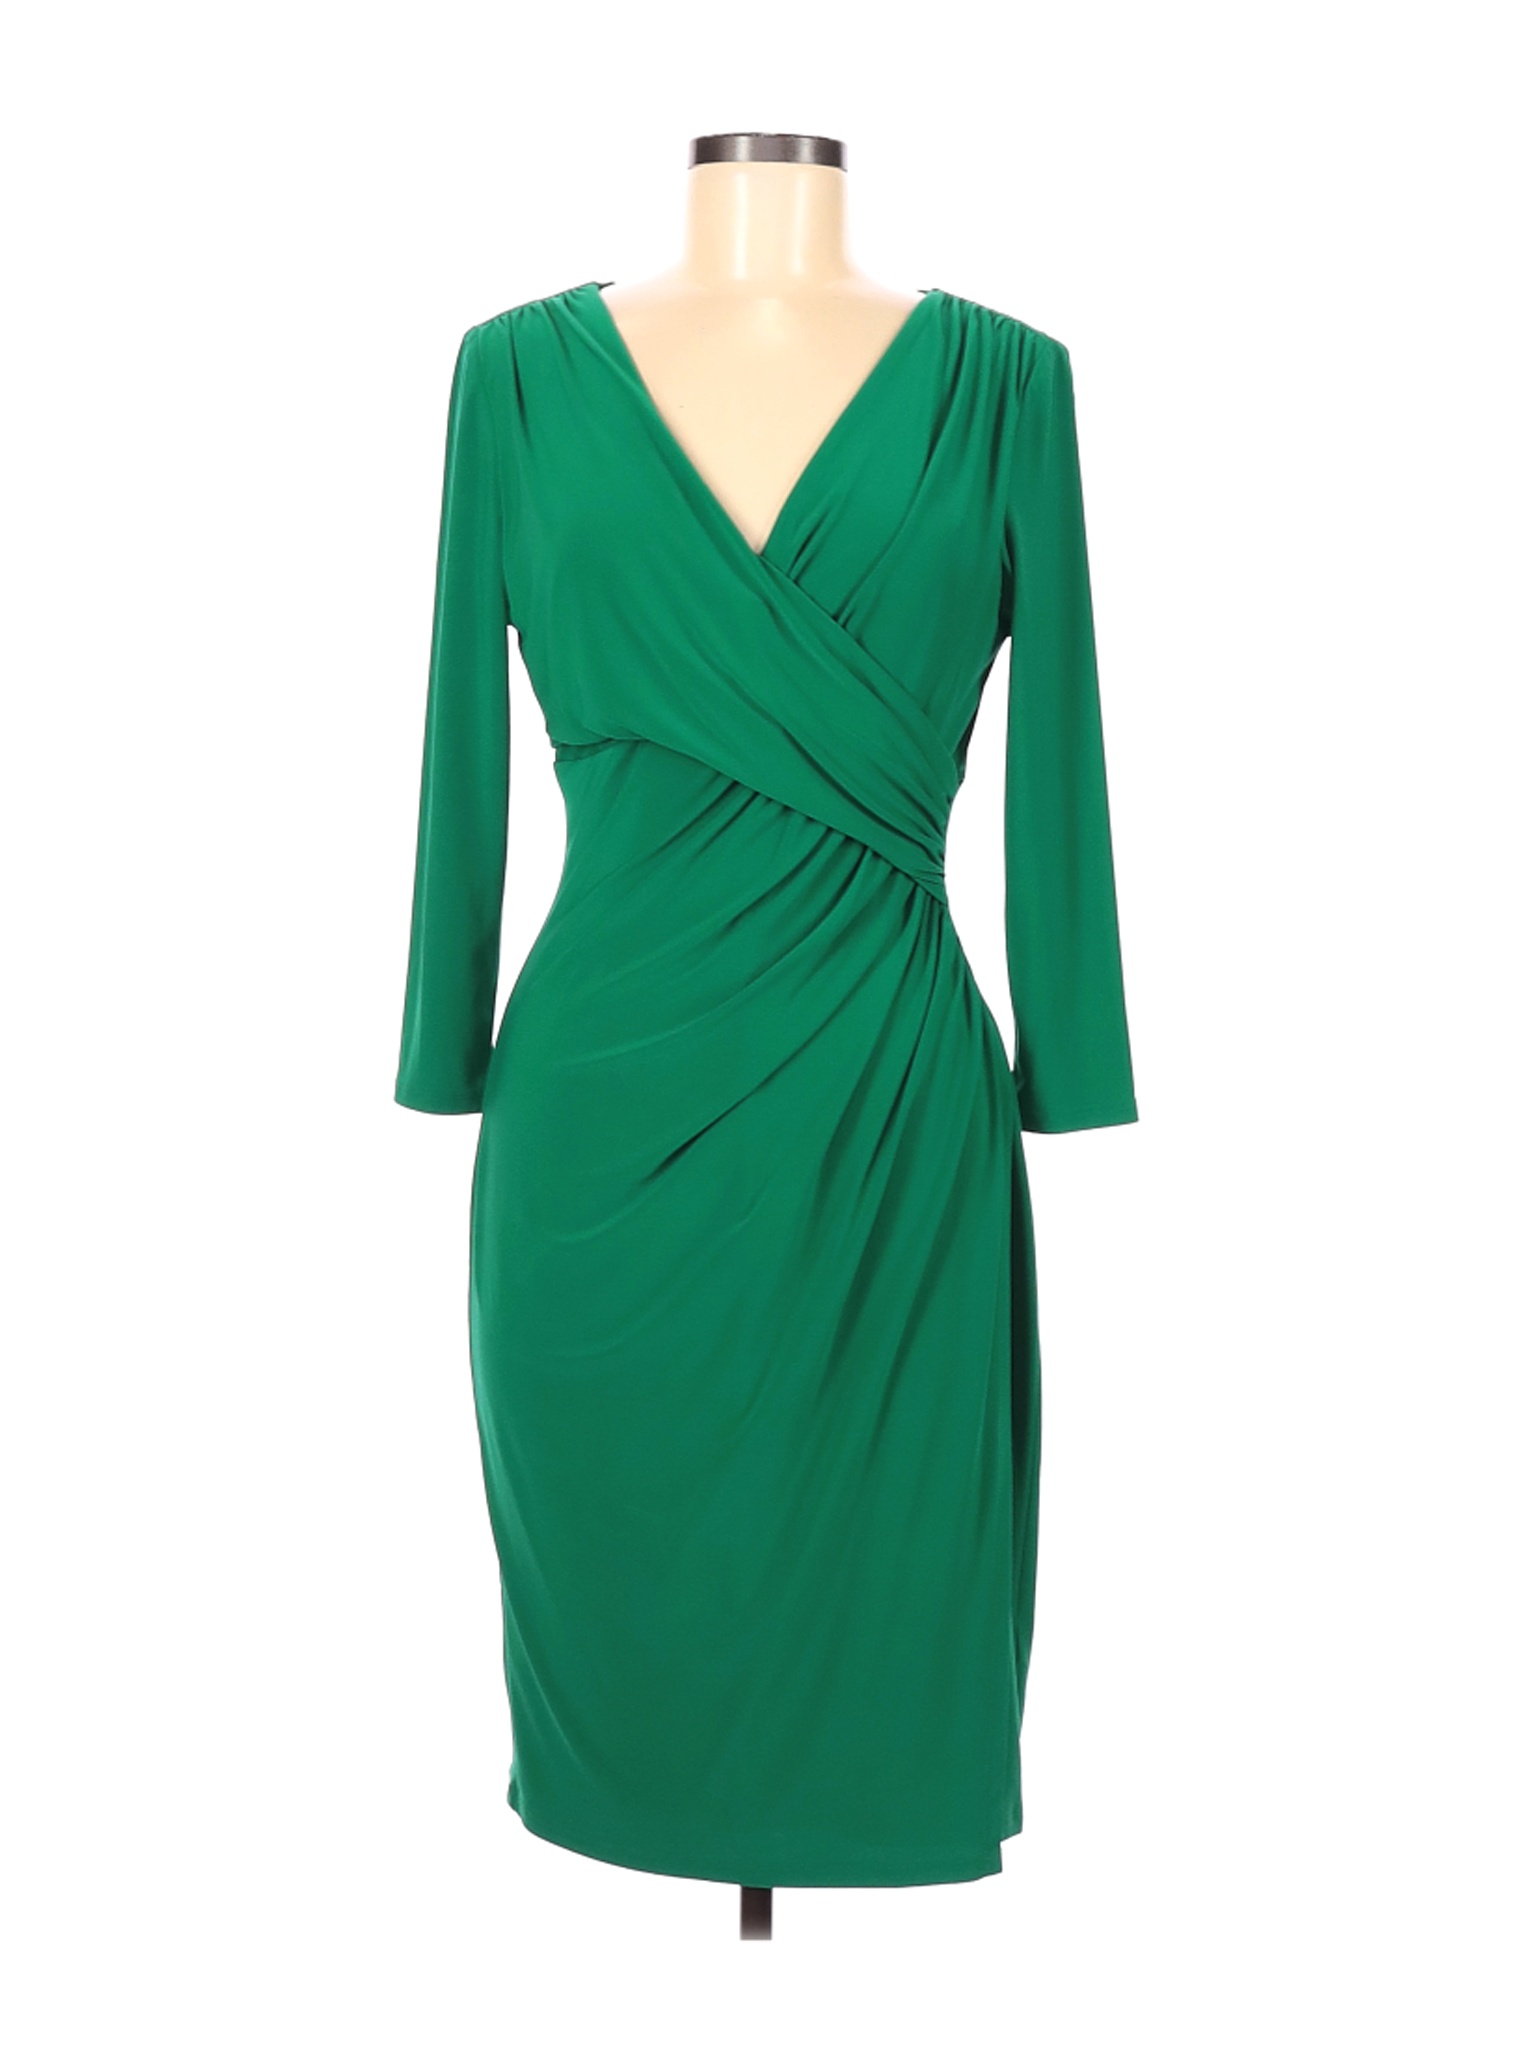 Lauren by Ralph Lauren Women Green Cocktail Dress 8 | eBay